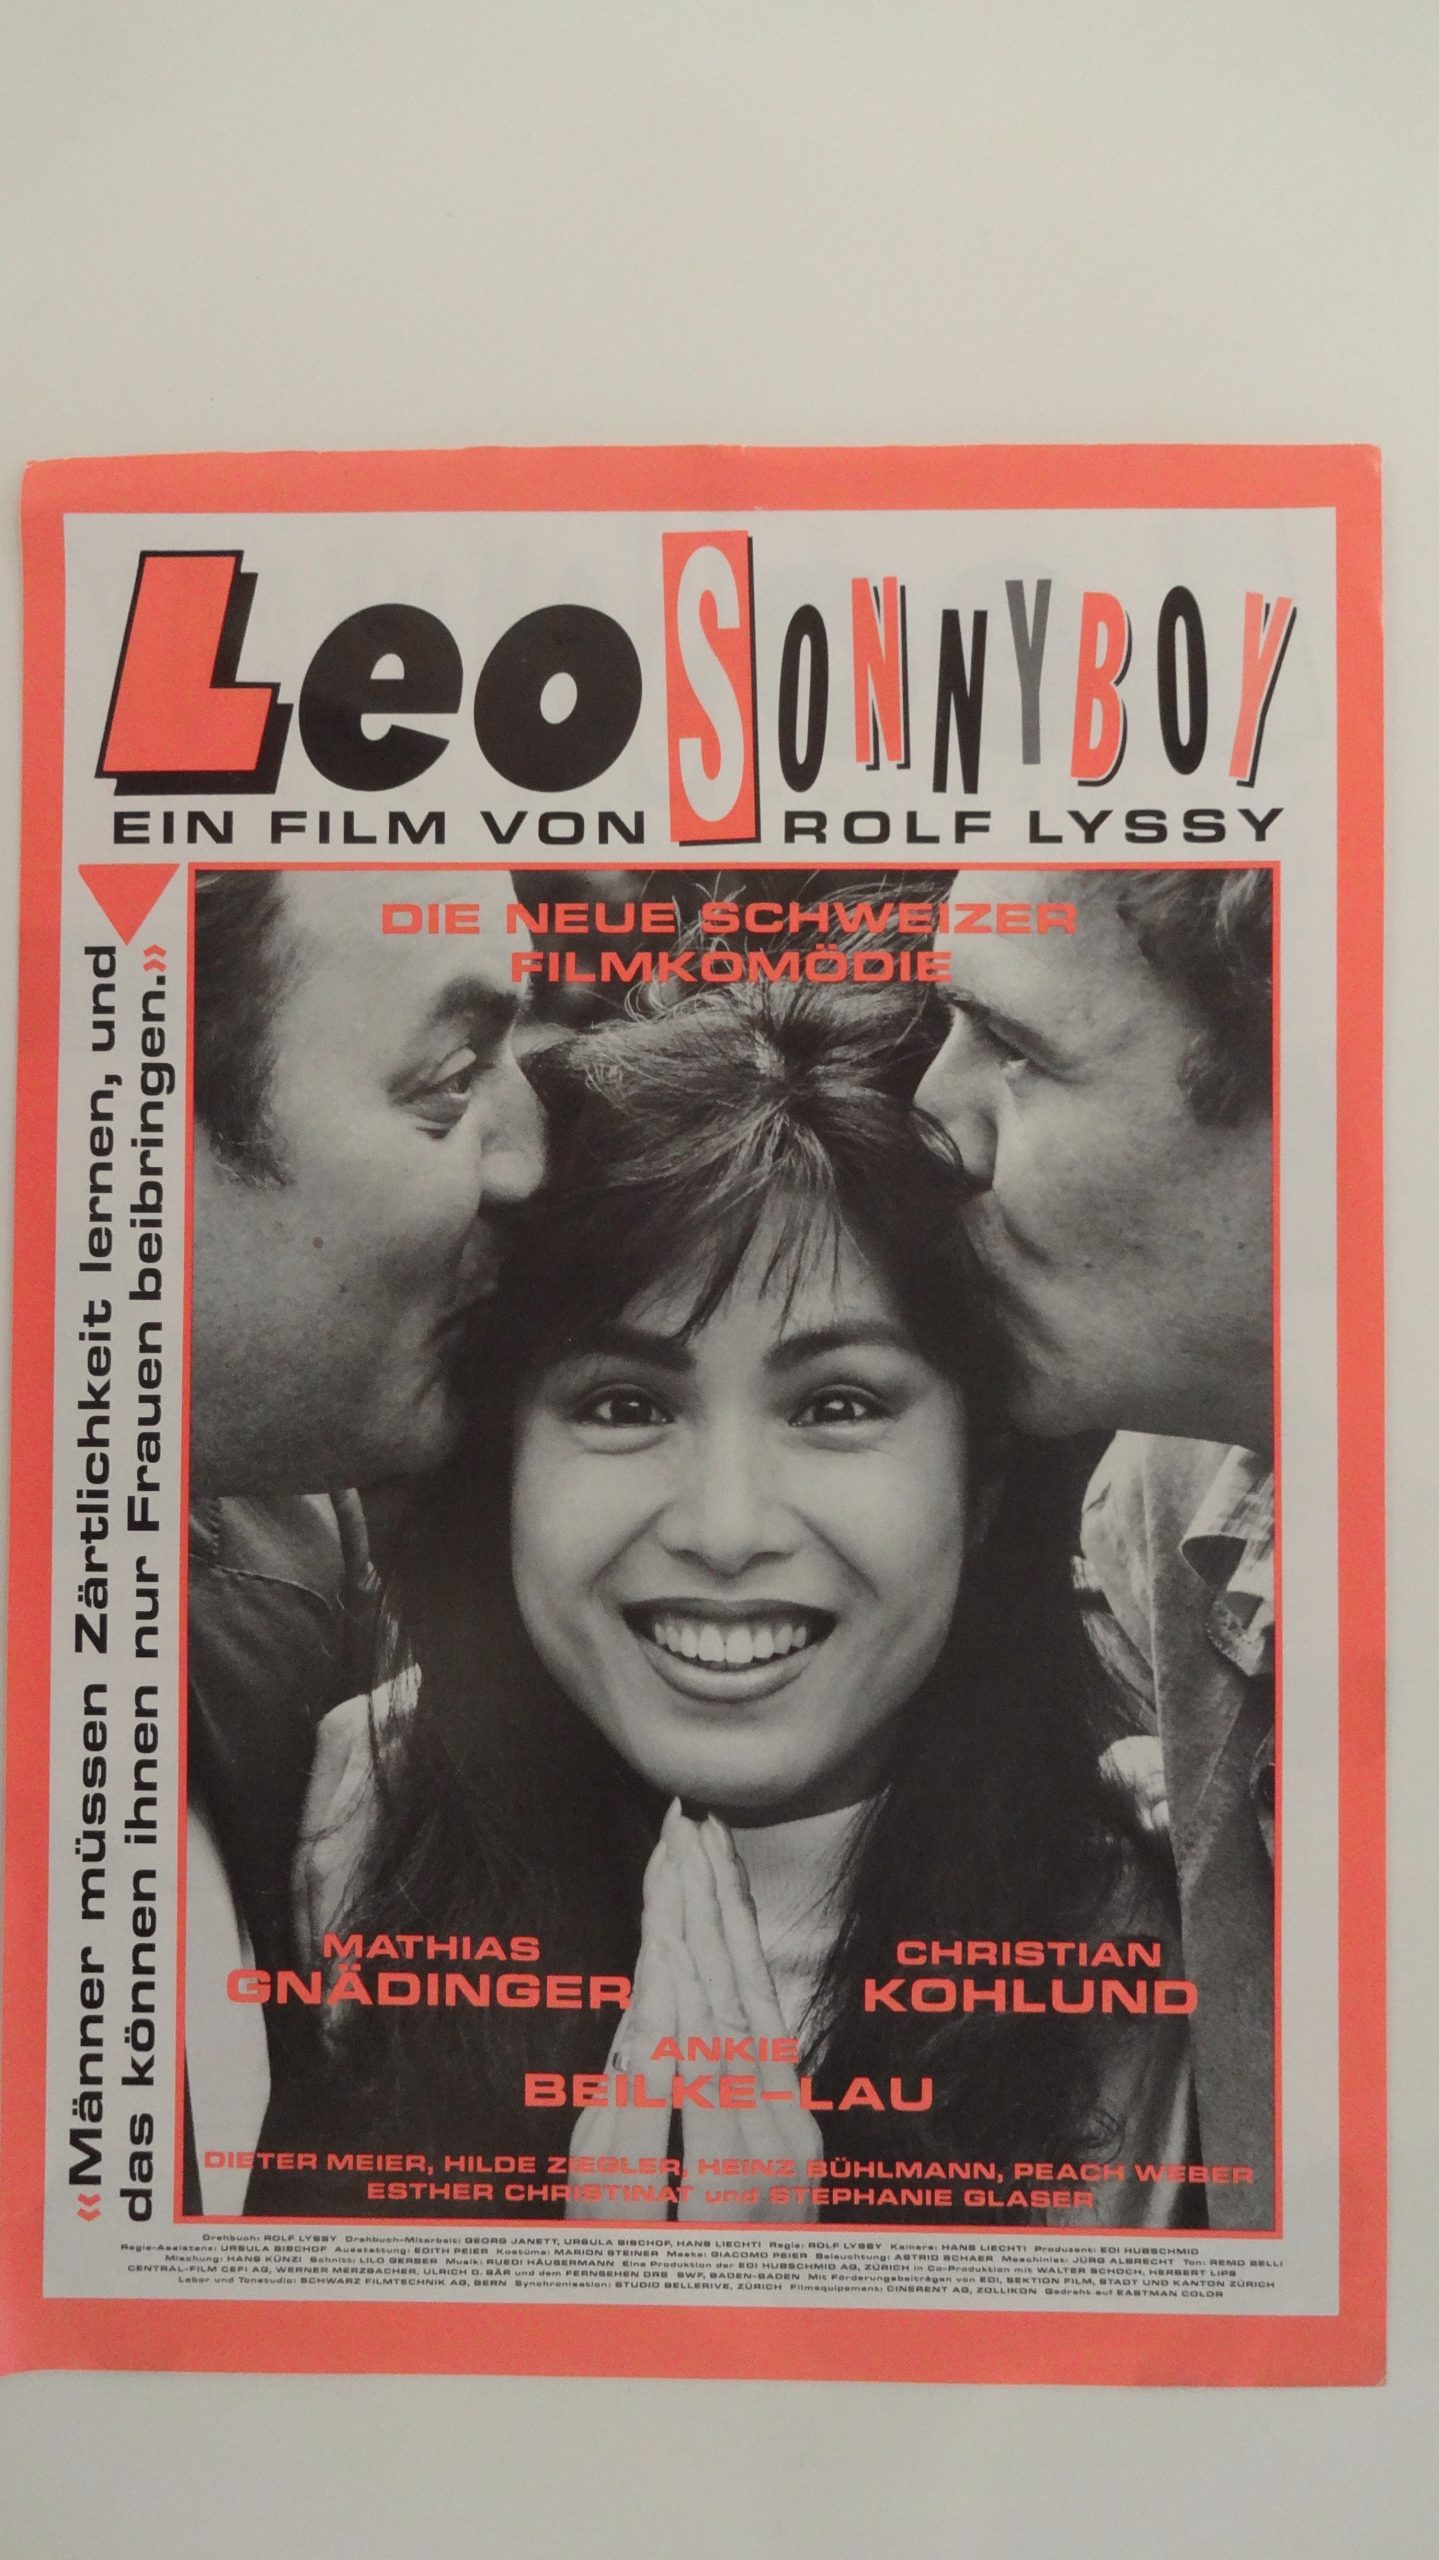 Leo Sonnyboy